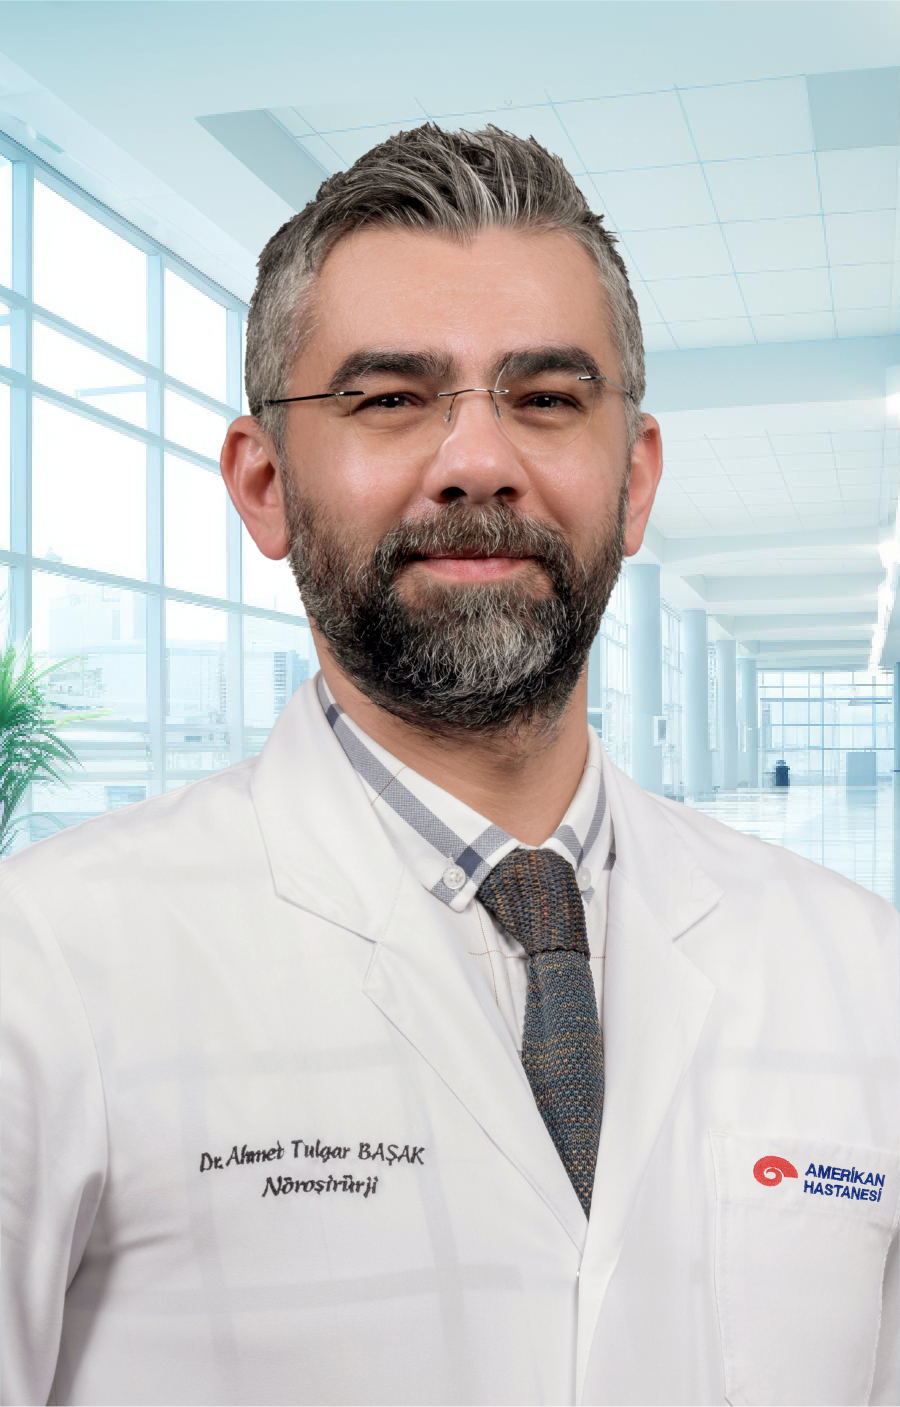 Assoc. Prof. Dr. Ahmet T. BAŞAK